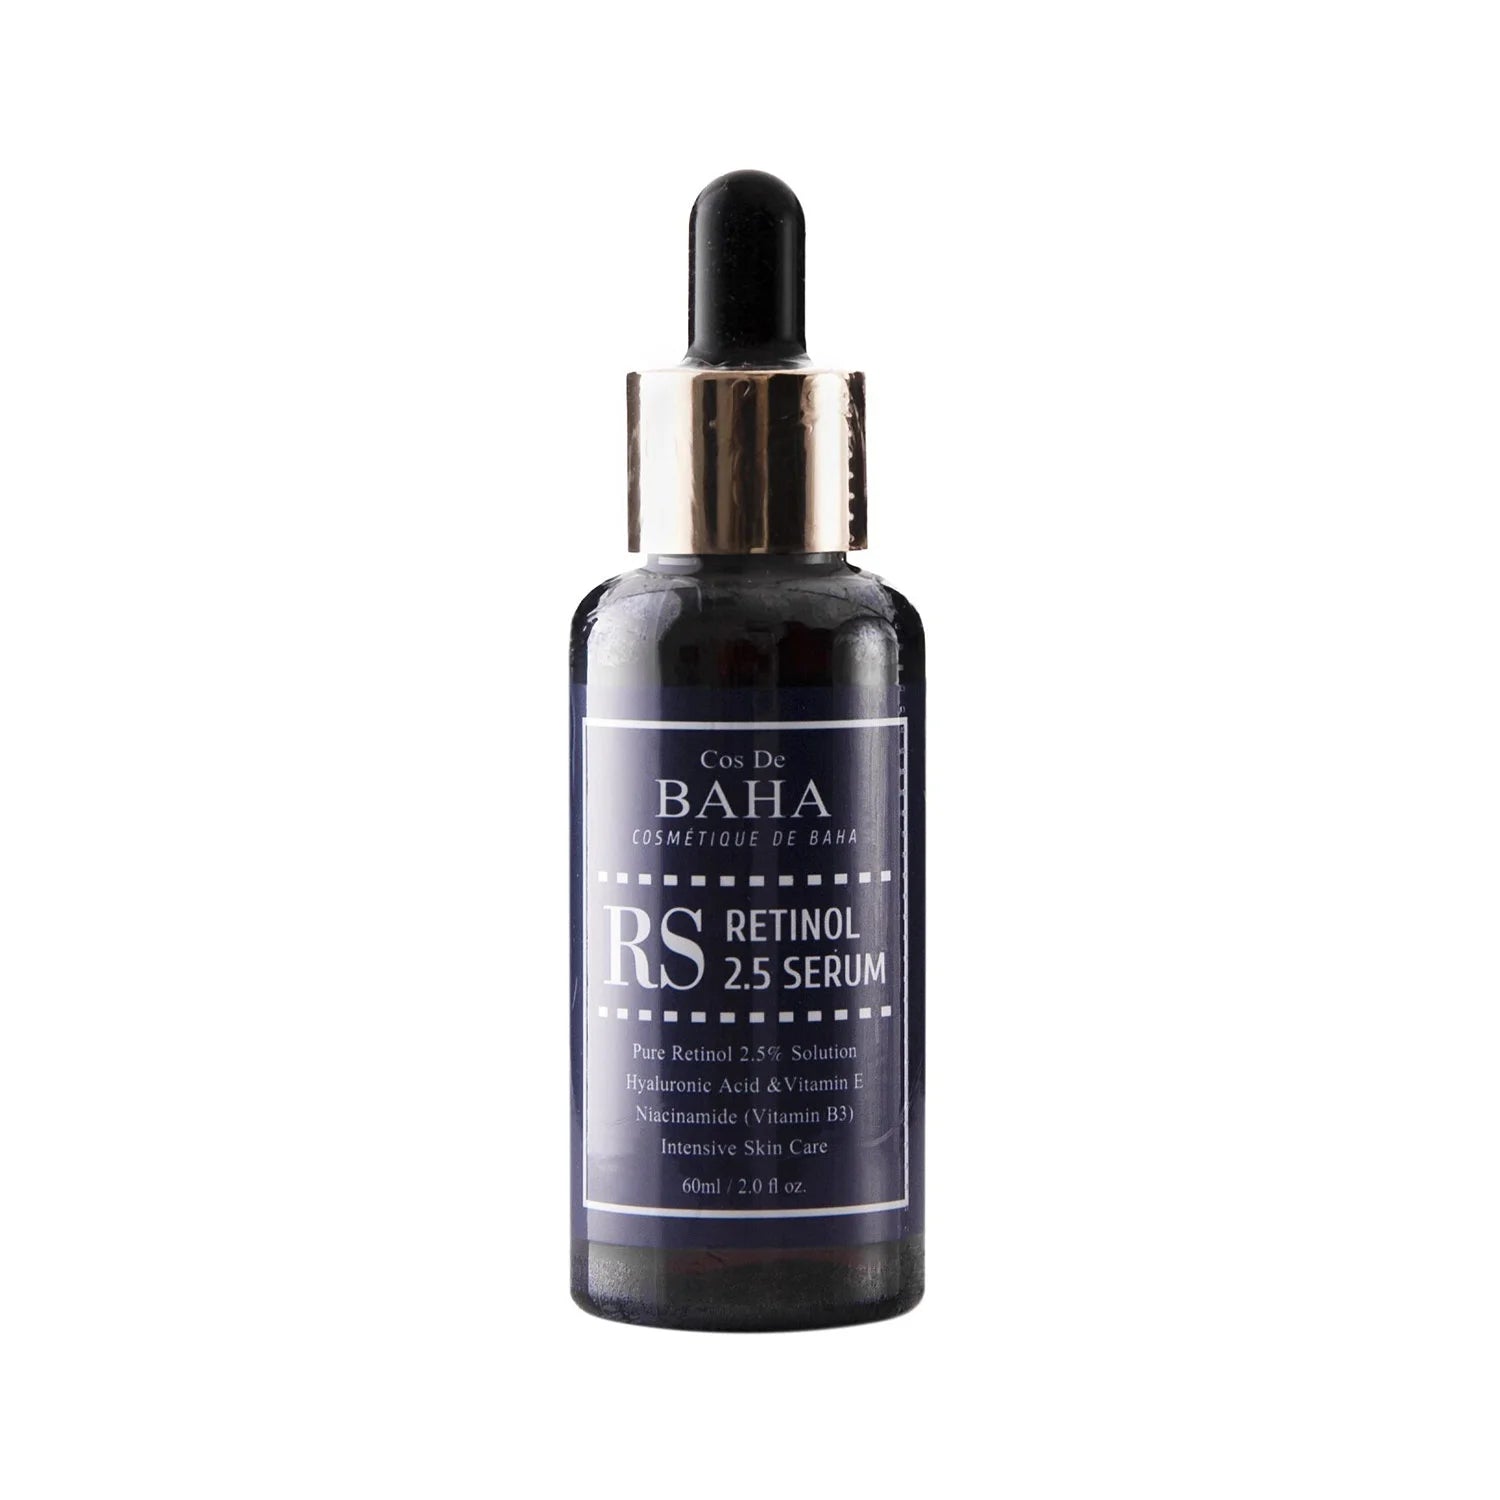 Cos De Baha RS Retinol 2.5 Serum Jumbo anti-aging potent brightening fine lines wrinkles hydrating rejuvenating K Beauty World